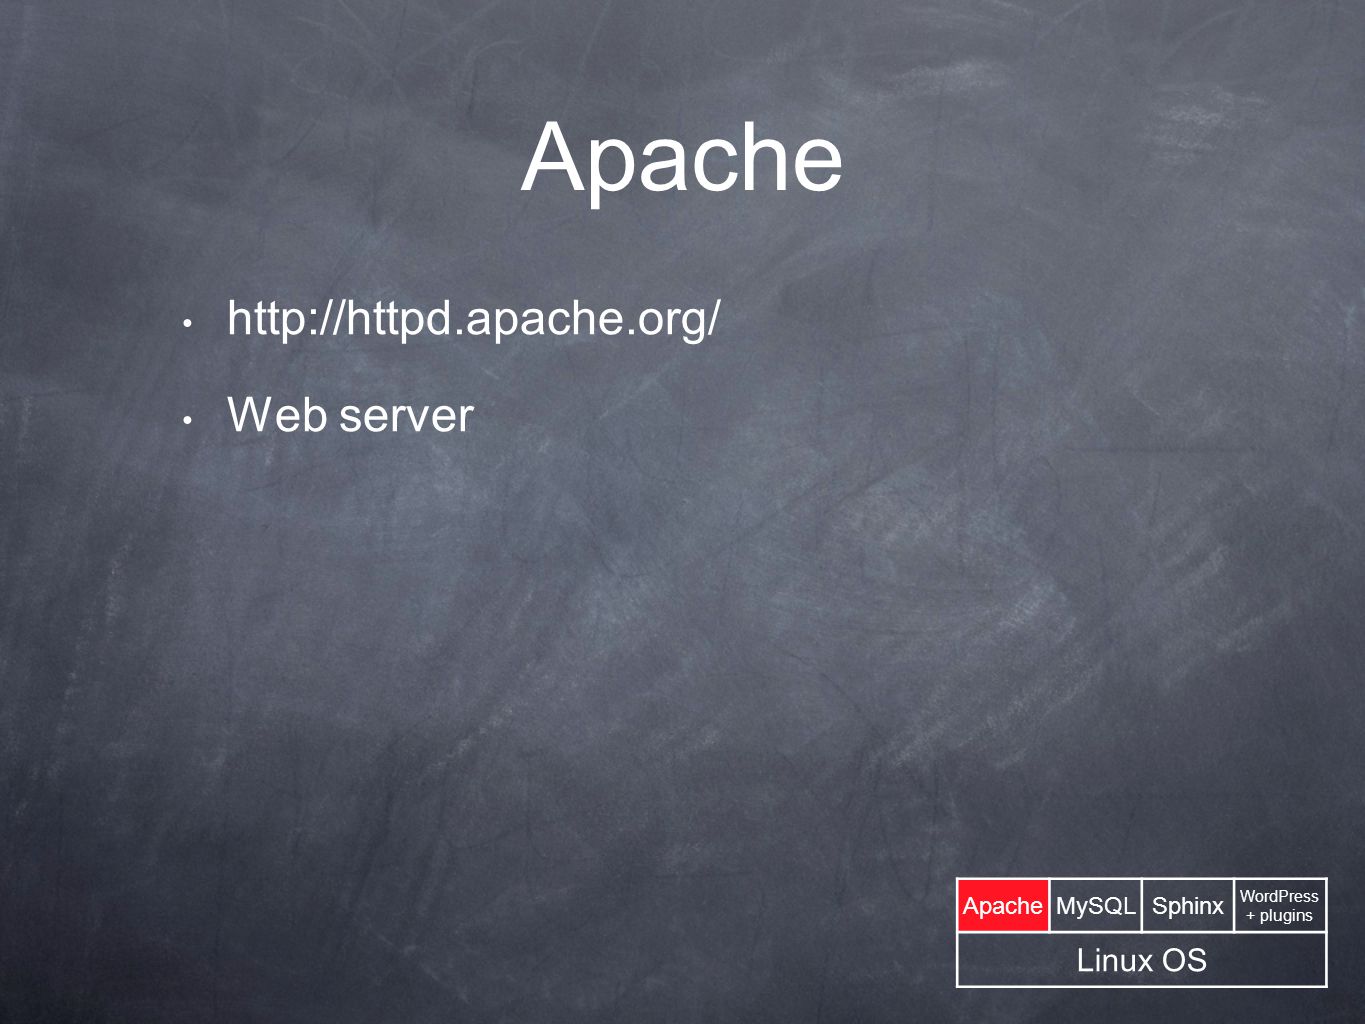 Apache   Web server ApacheMySQLSphinx WordPress + plugins Linux OS